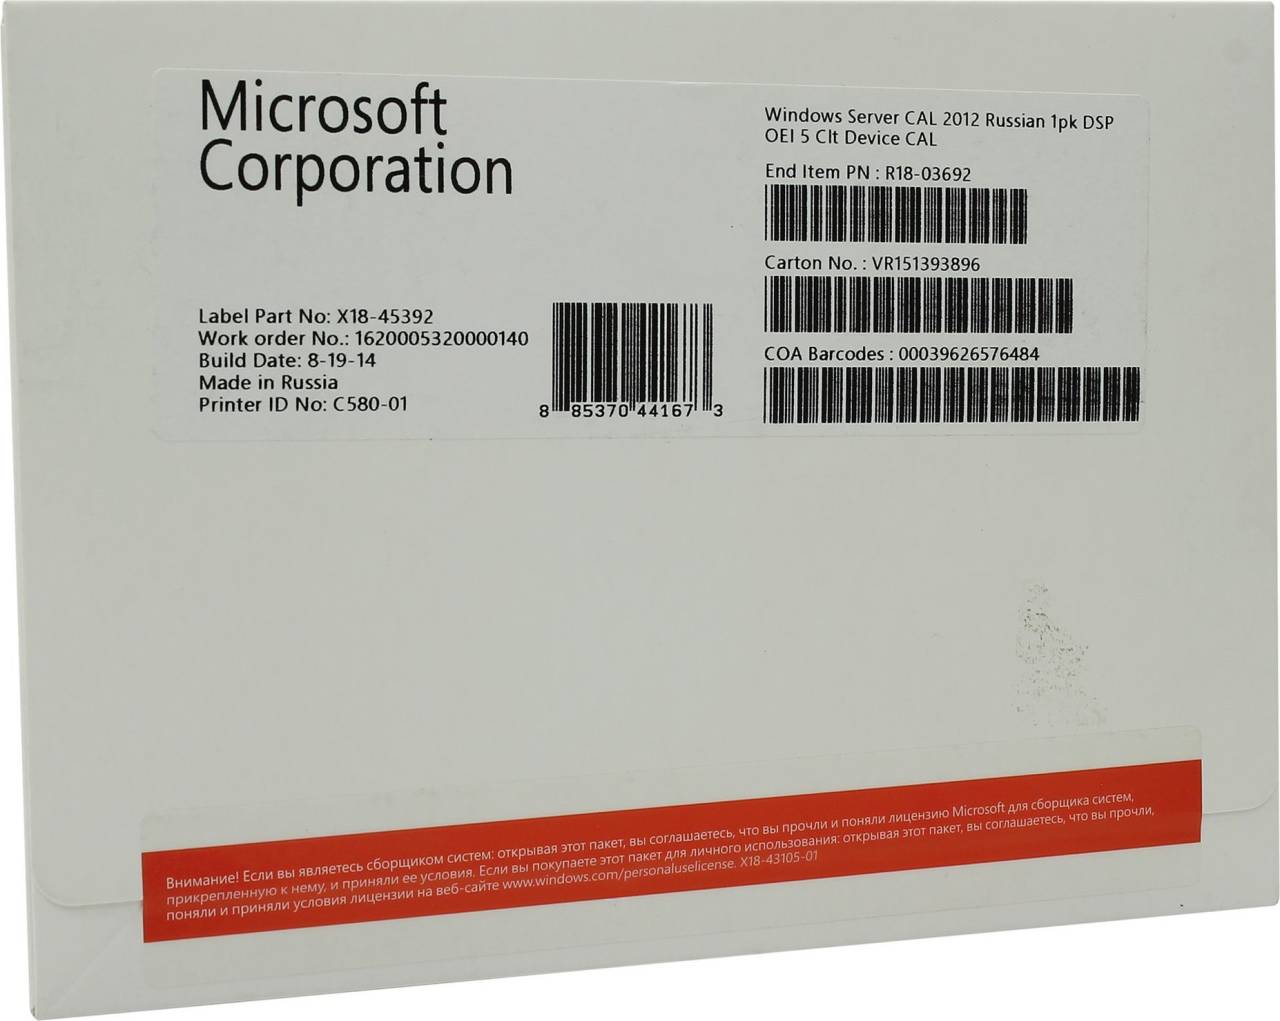   Microsoft Windows Server CAL 2012 5 Clt Device .(OEM) < R18-03692 >